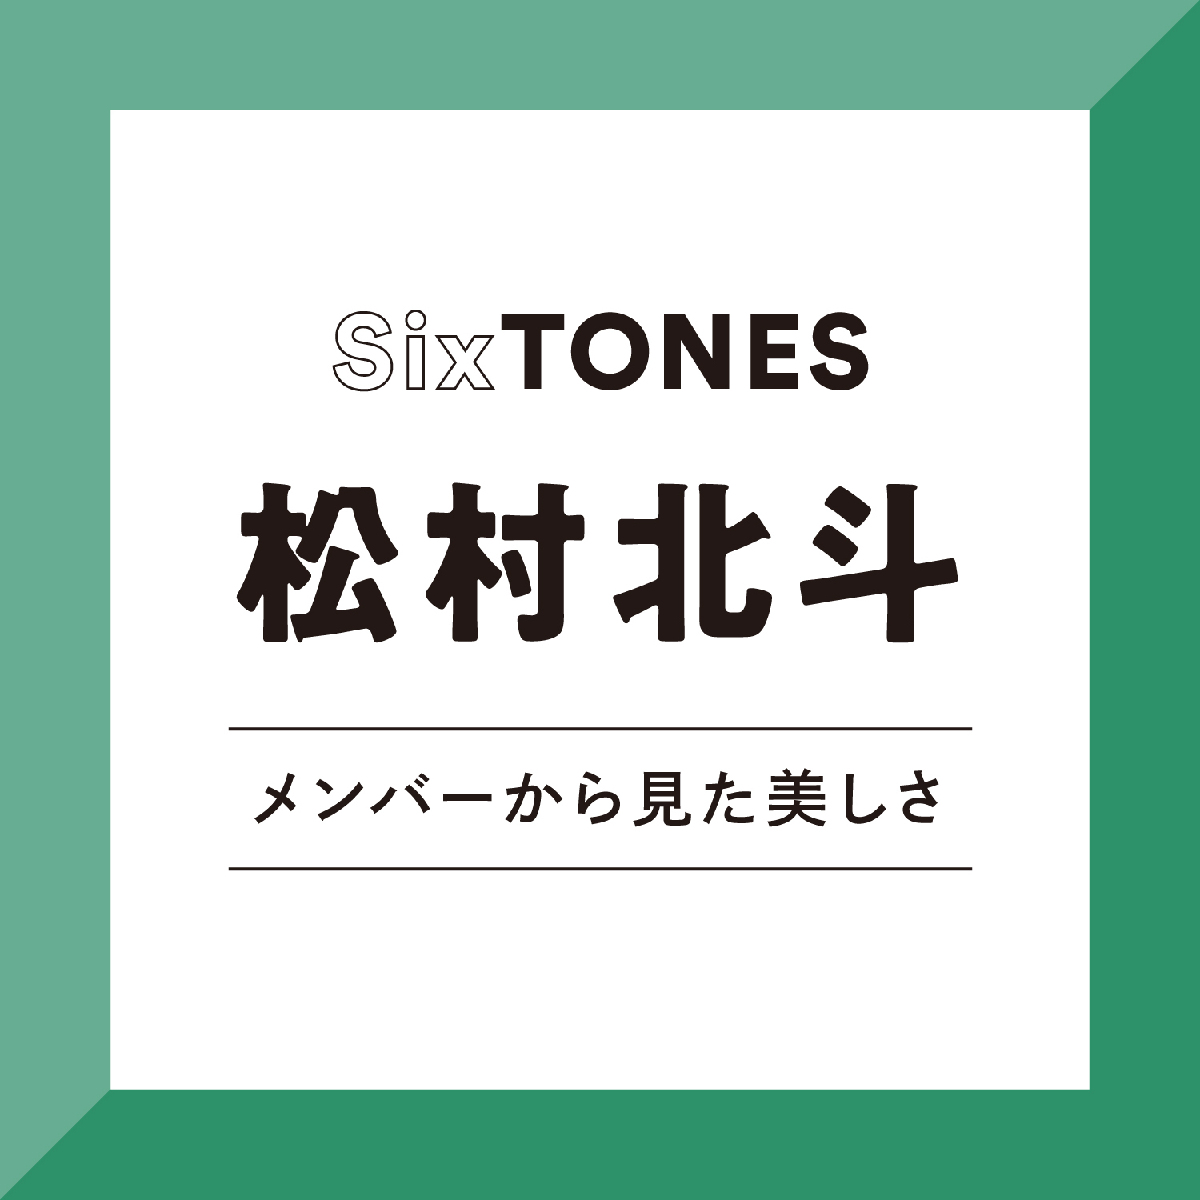 【SixTONES】森本慎太郎が感じる、松村北斗の美しさ「北斗は表情。シチュエーションや衣装で変わる魅せ方や表現力はすごい」